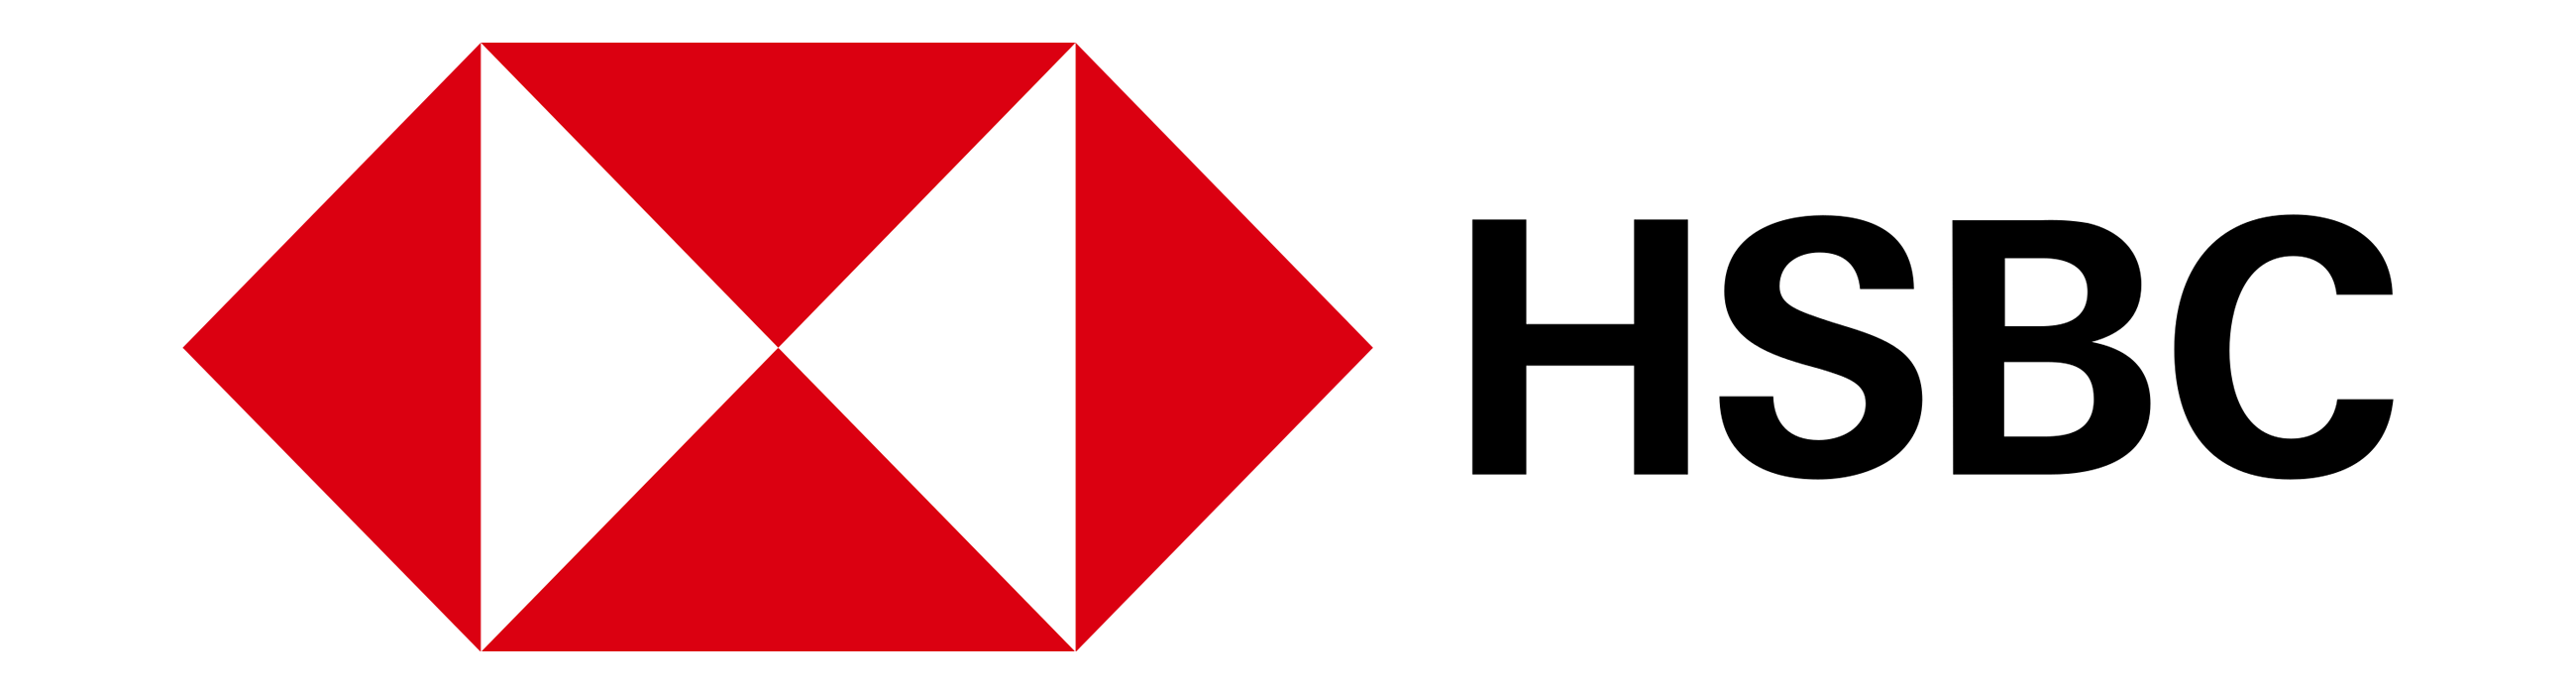 HSBC-1